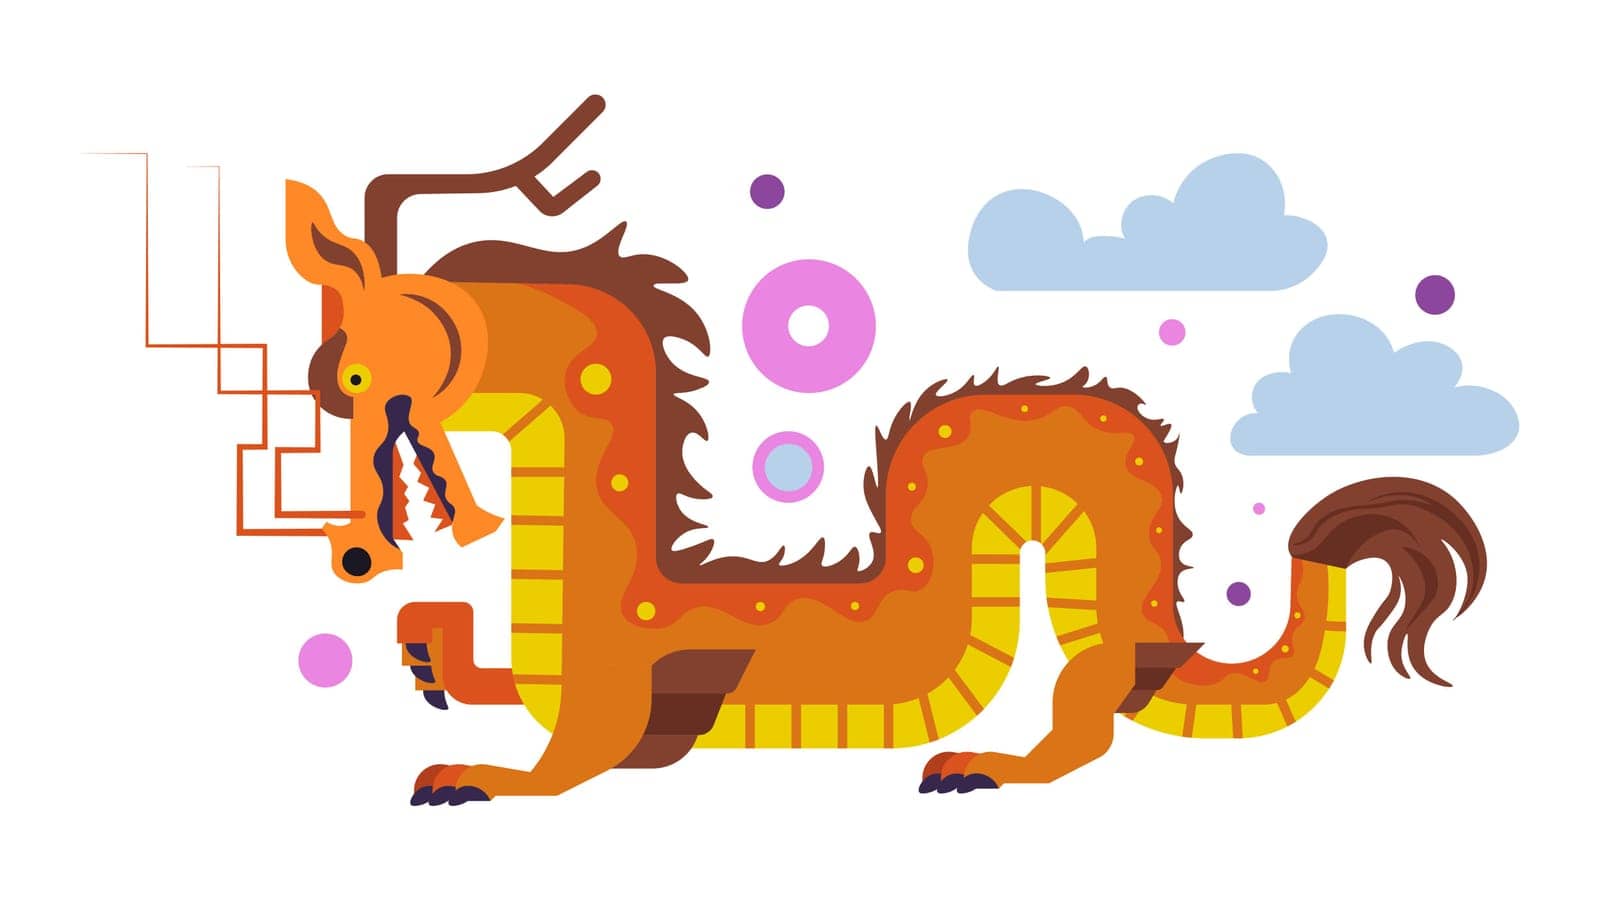 Mythological dragon character, fantasy reptile by Sonulkaster